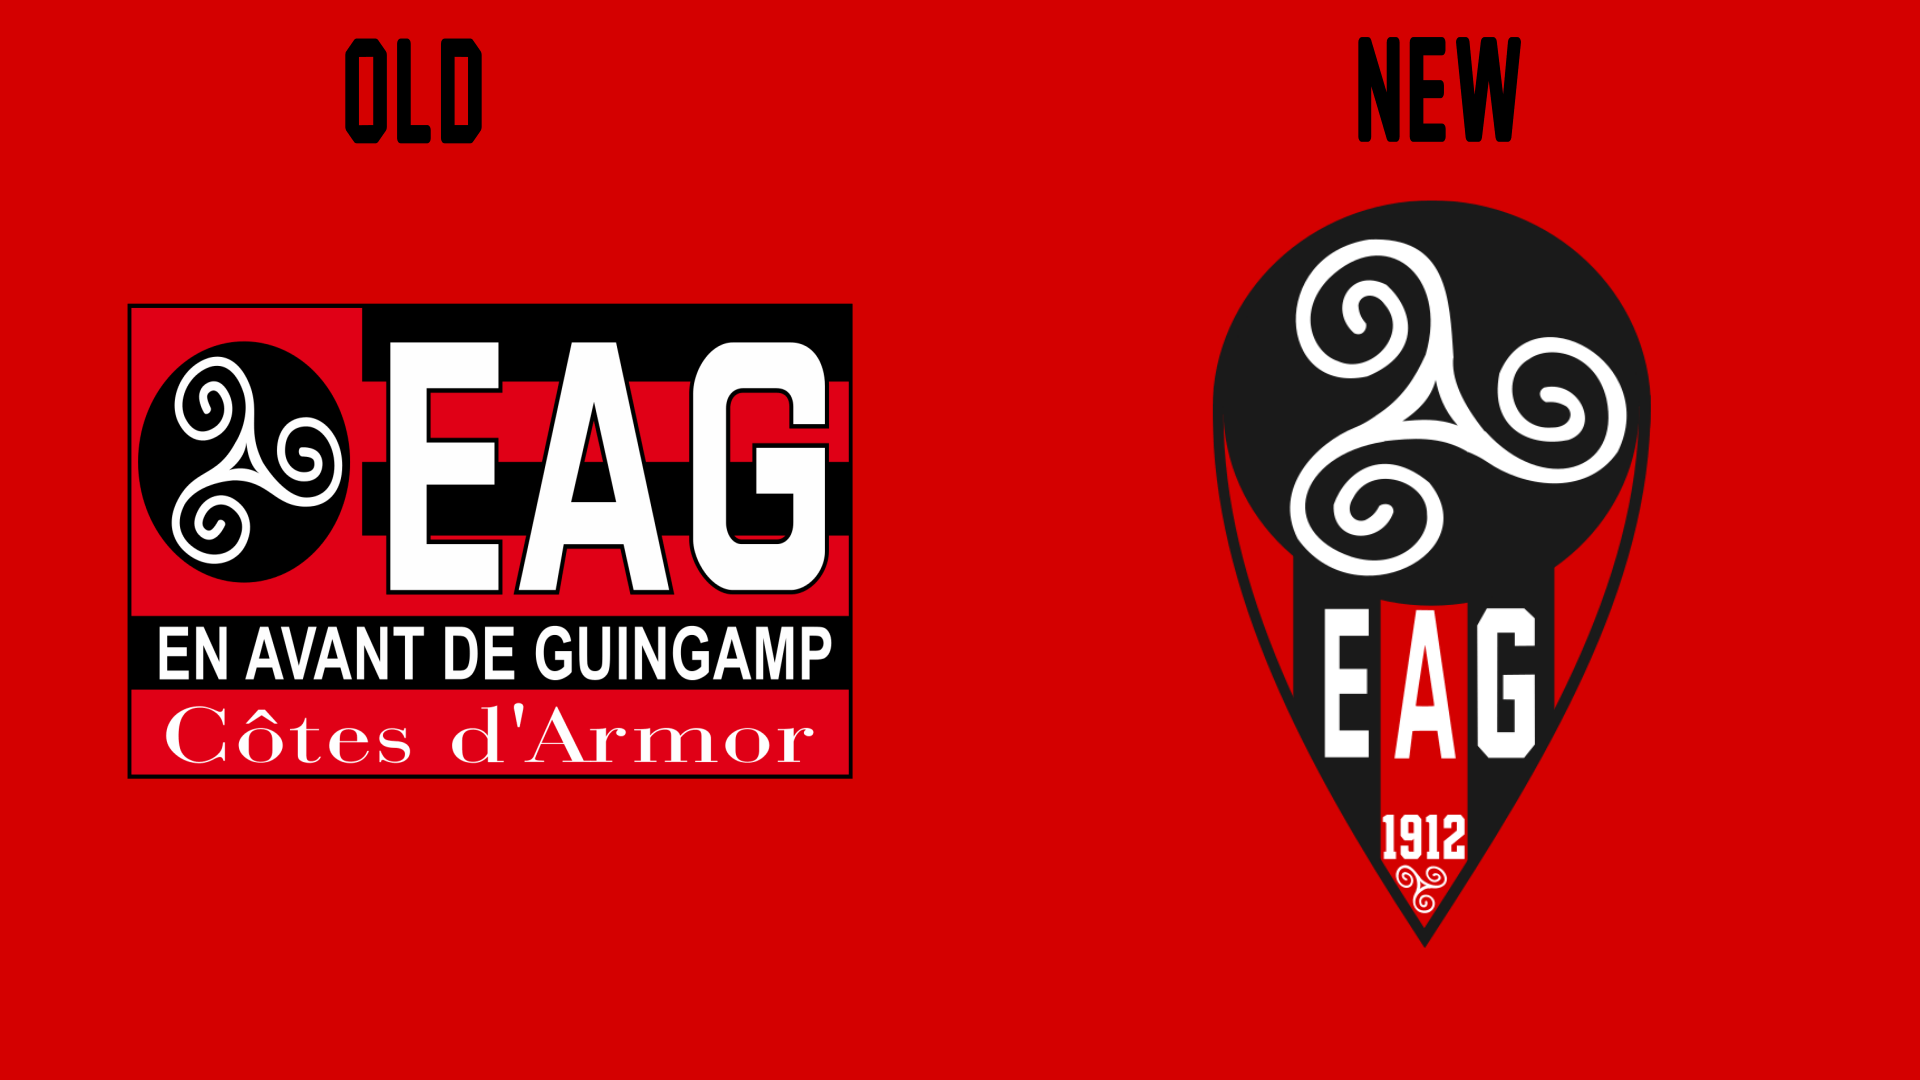 EAG Logo - EAG logo update (C&C Wanted) Creamer's Sports